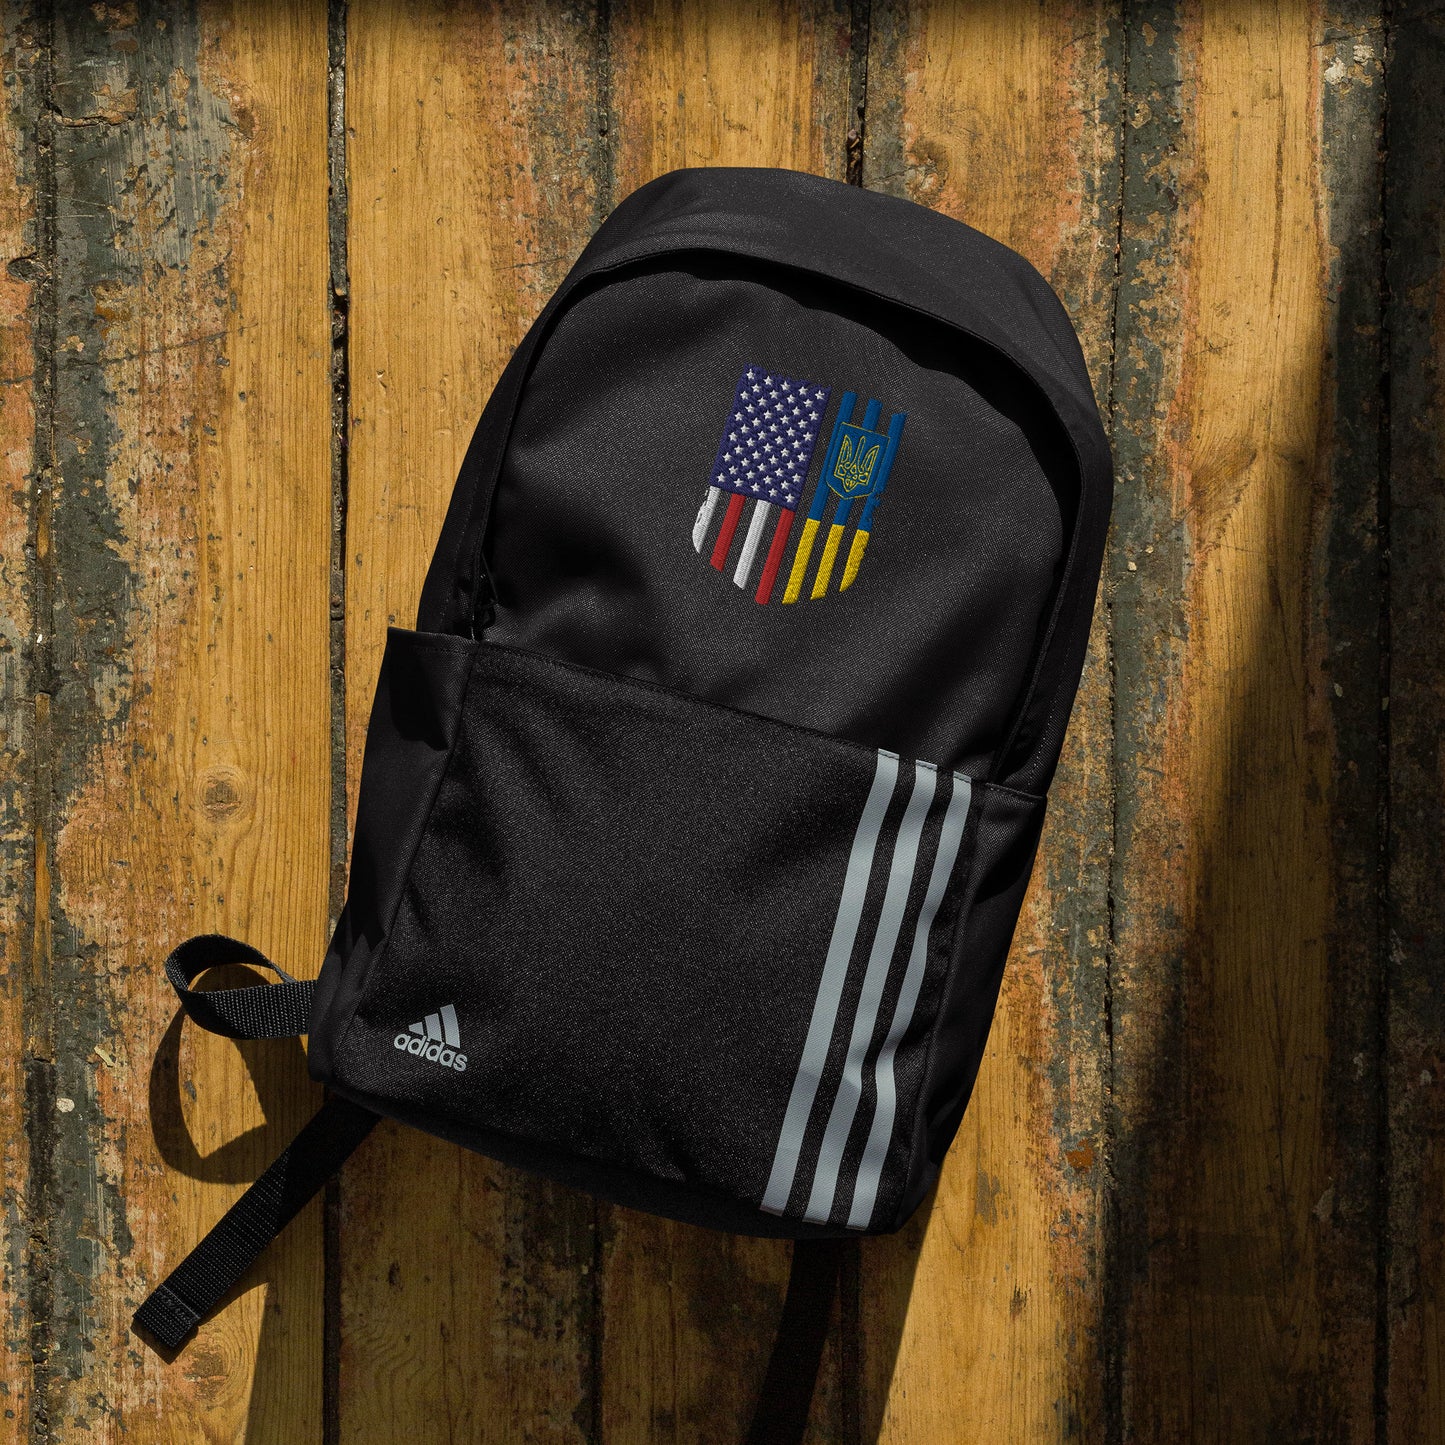 adidas backpack USA UKRAINE